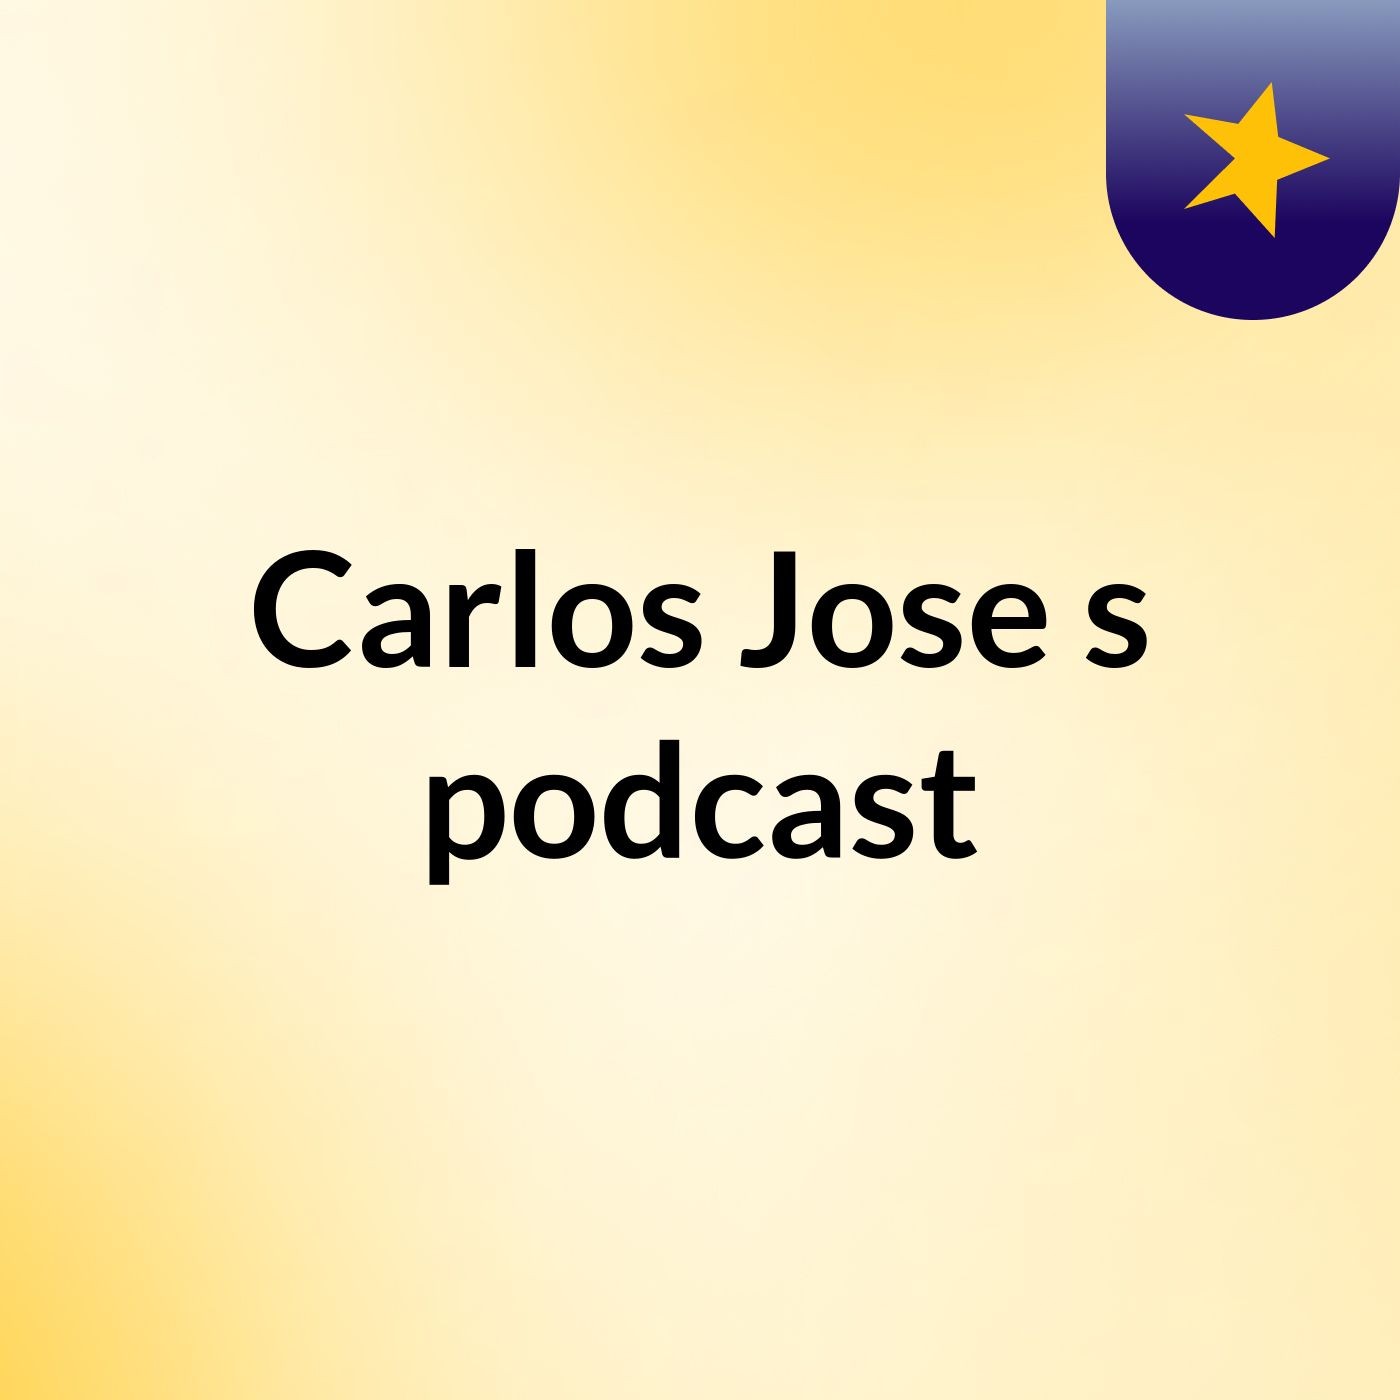 Carlos Jose's podcast